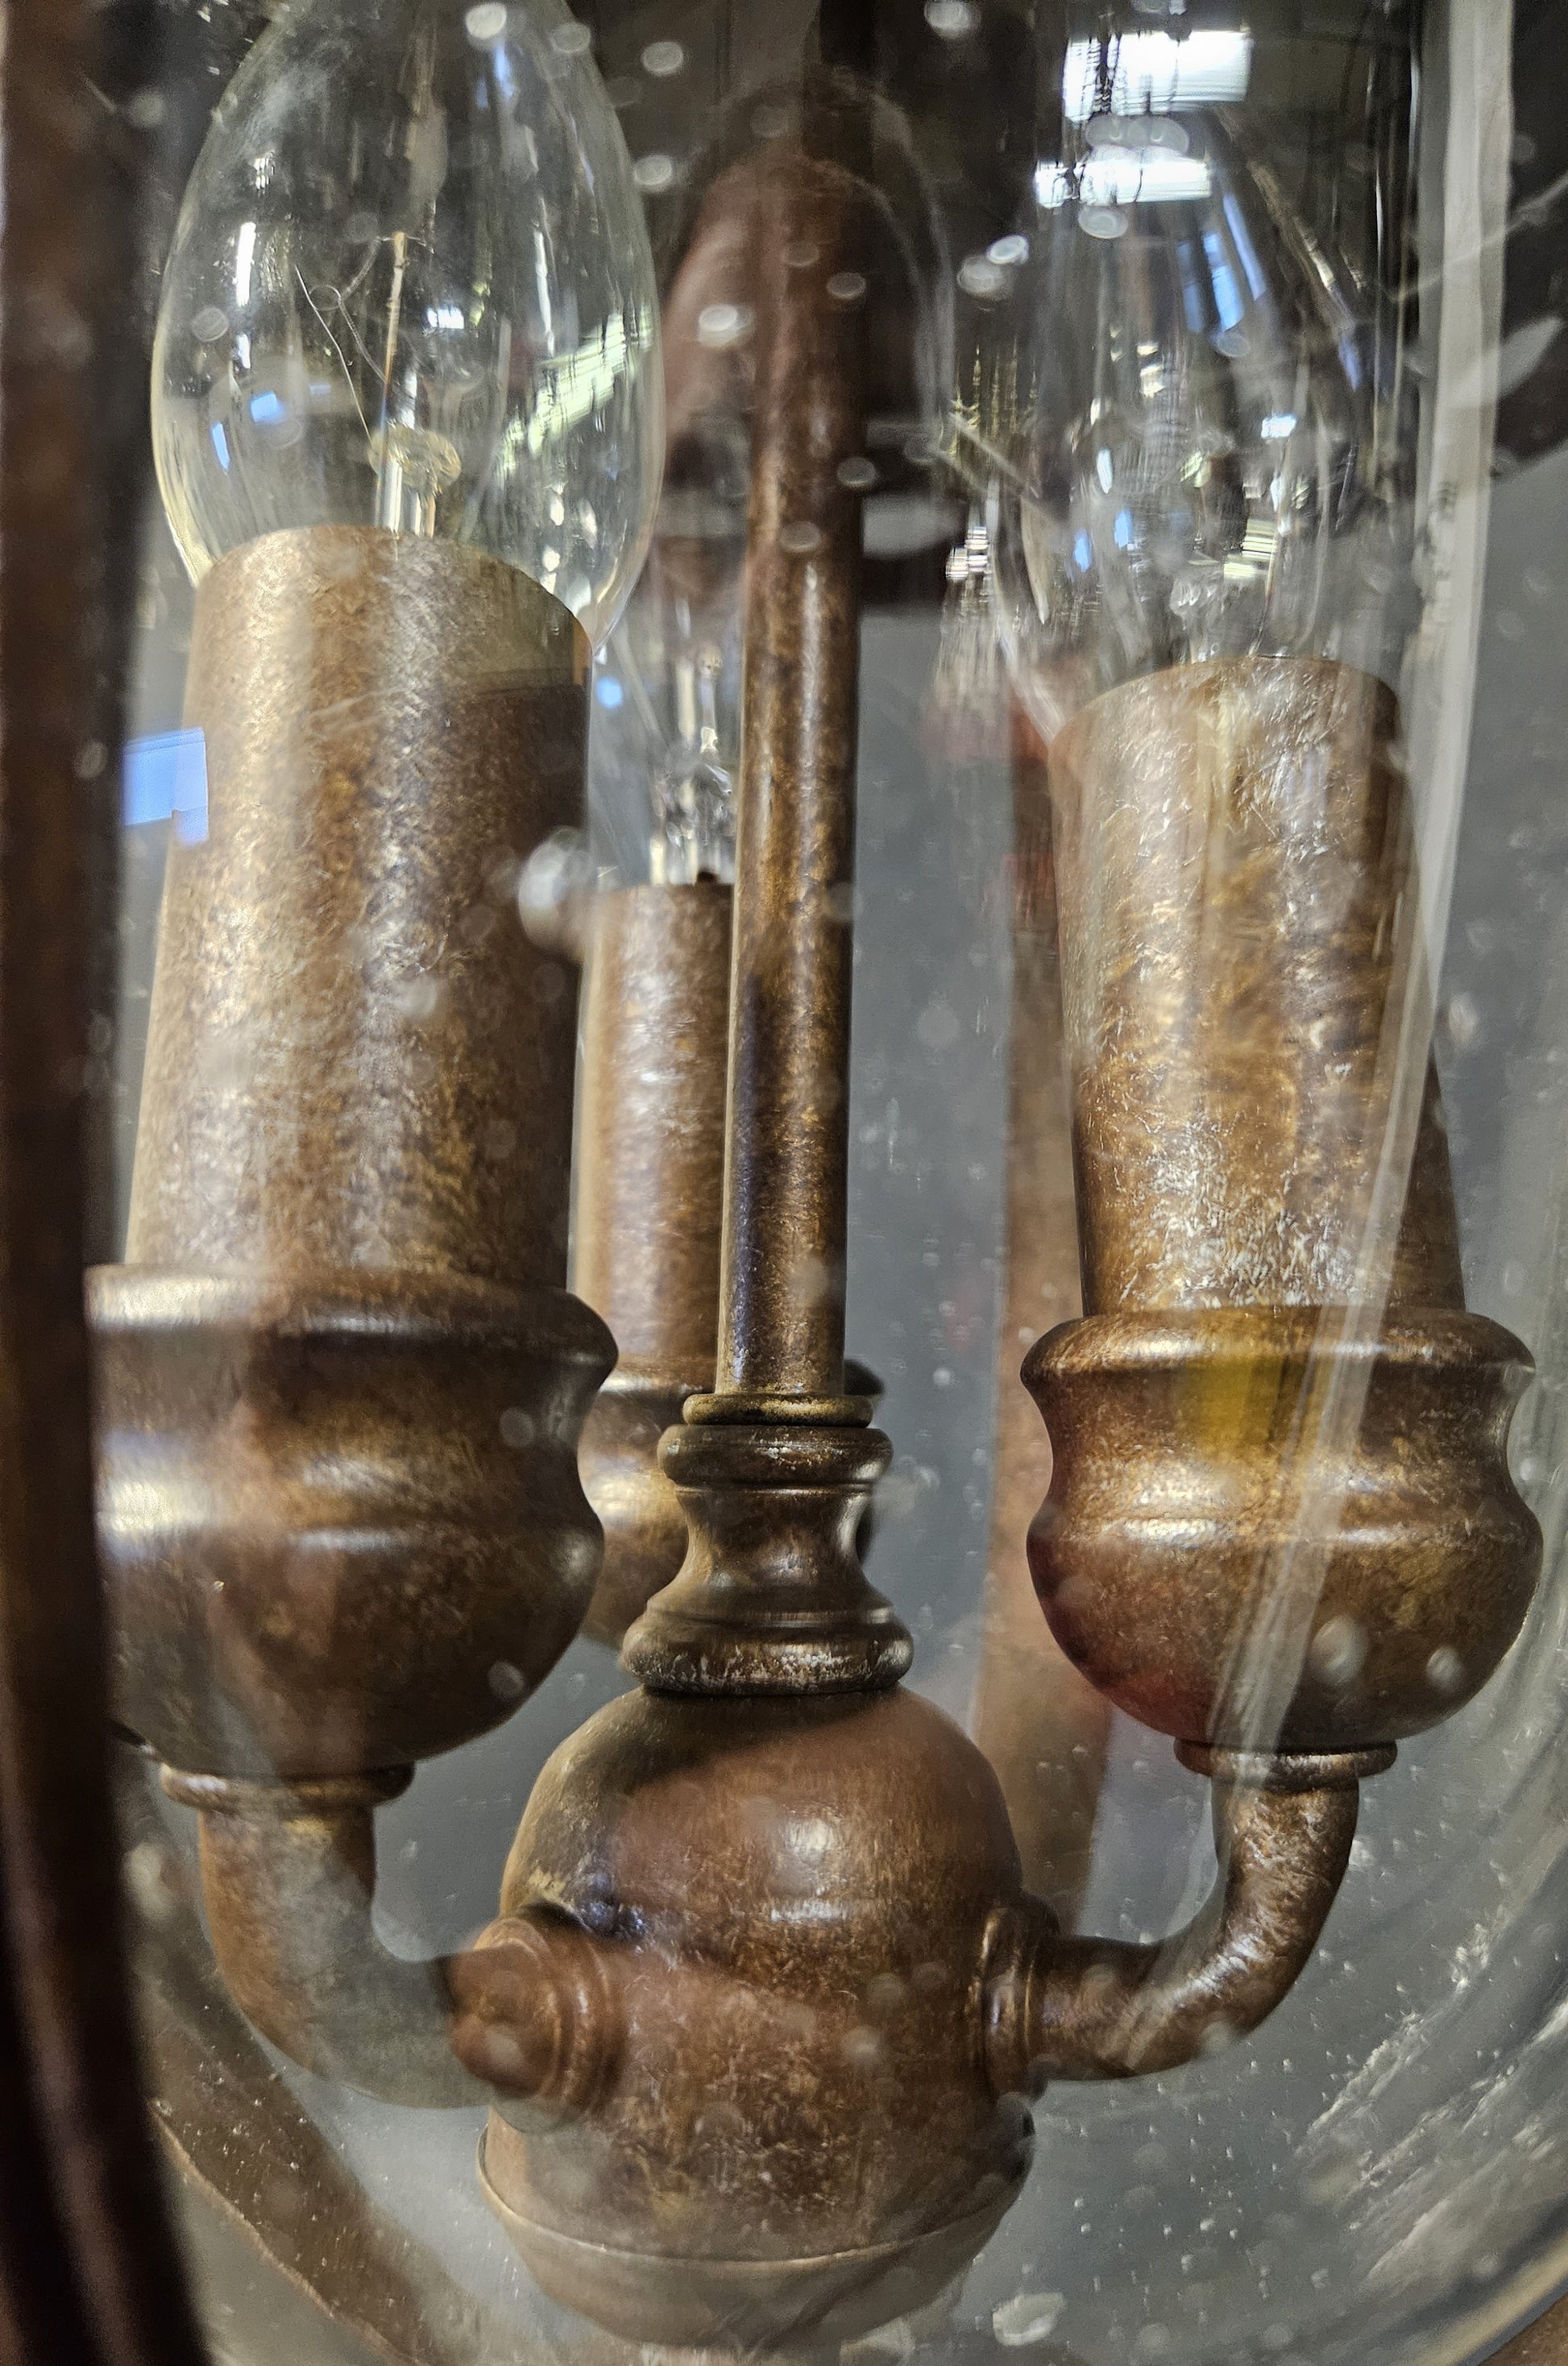 close up view of internal lantern